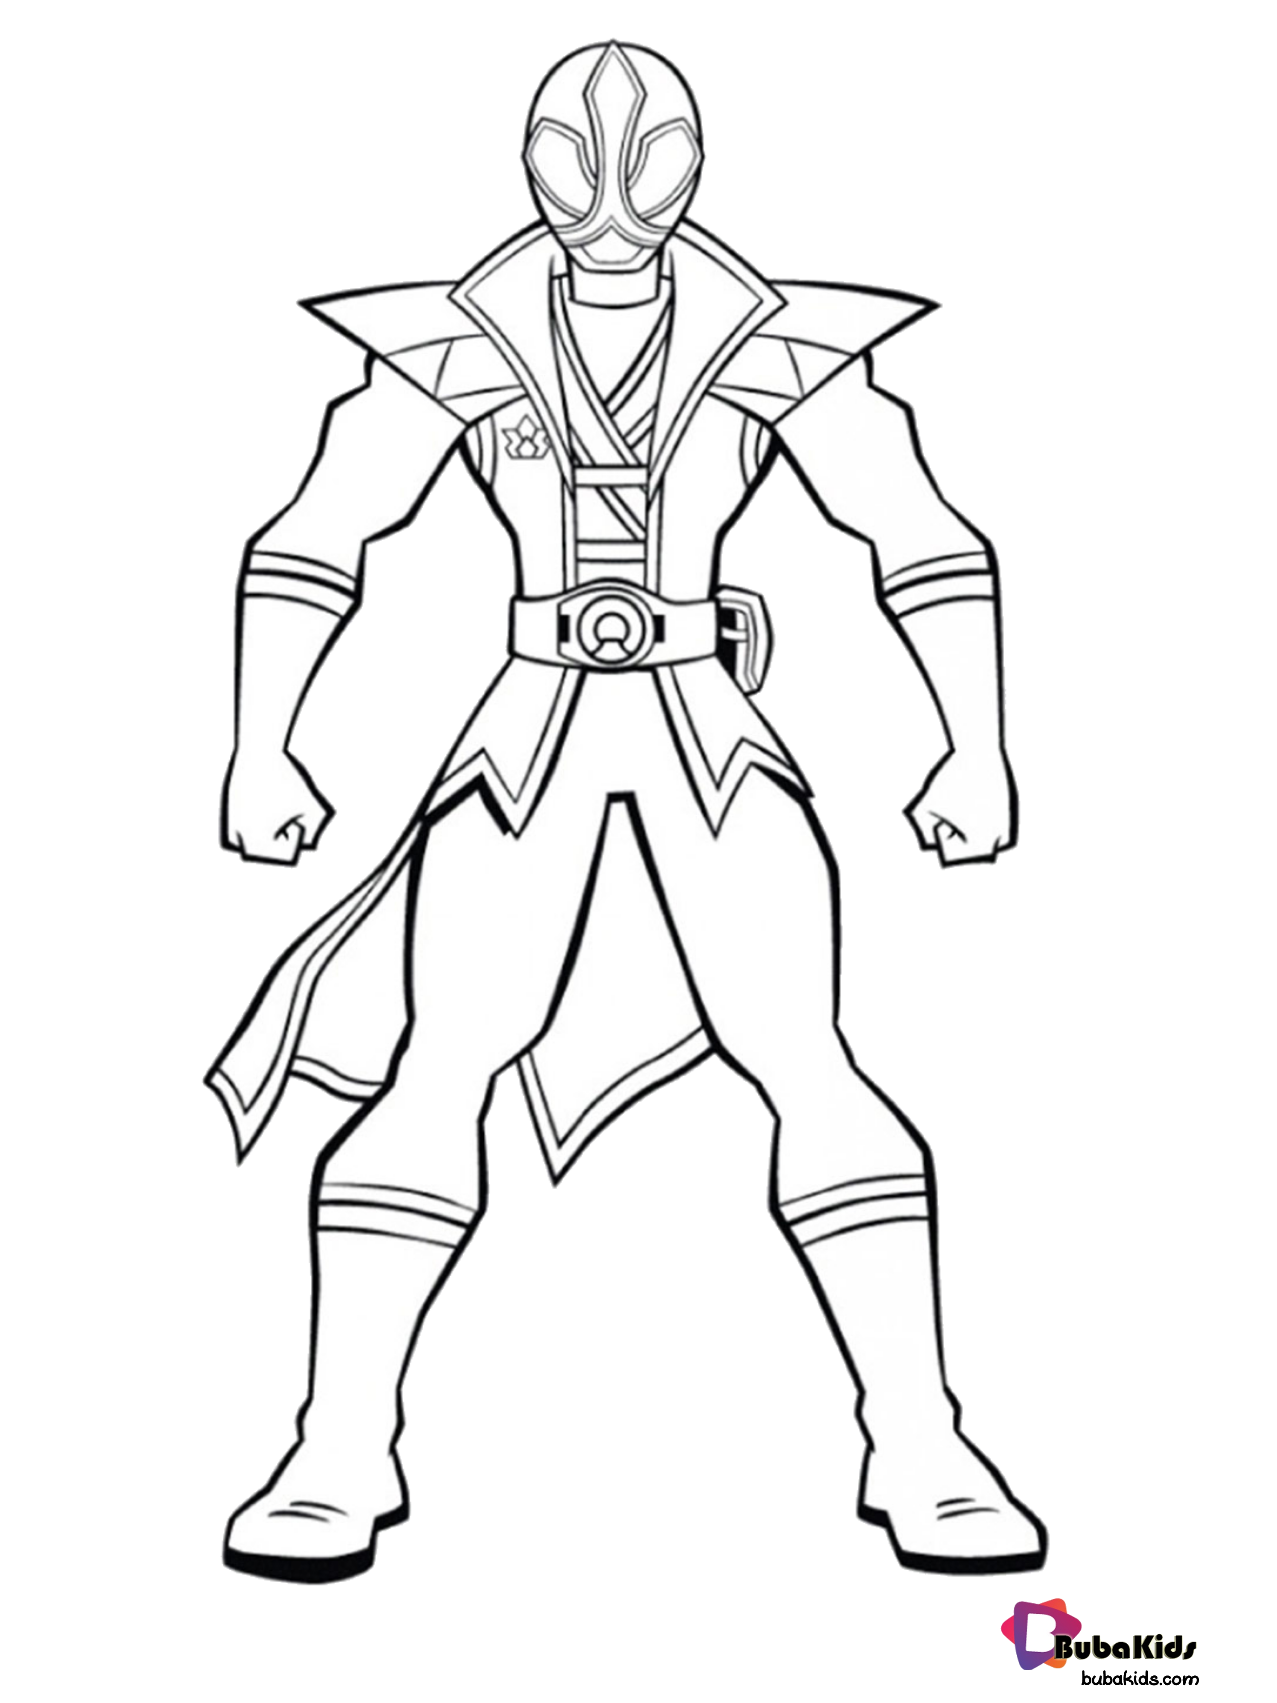 Free download Power Ranger Megaforce coloring page. Wallpaper